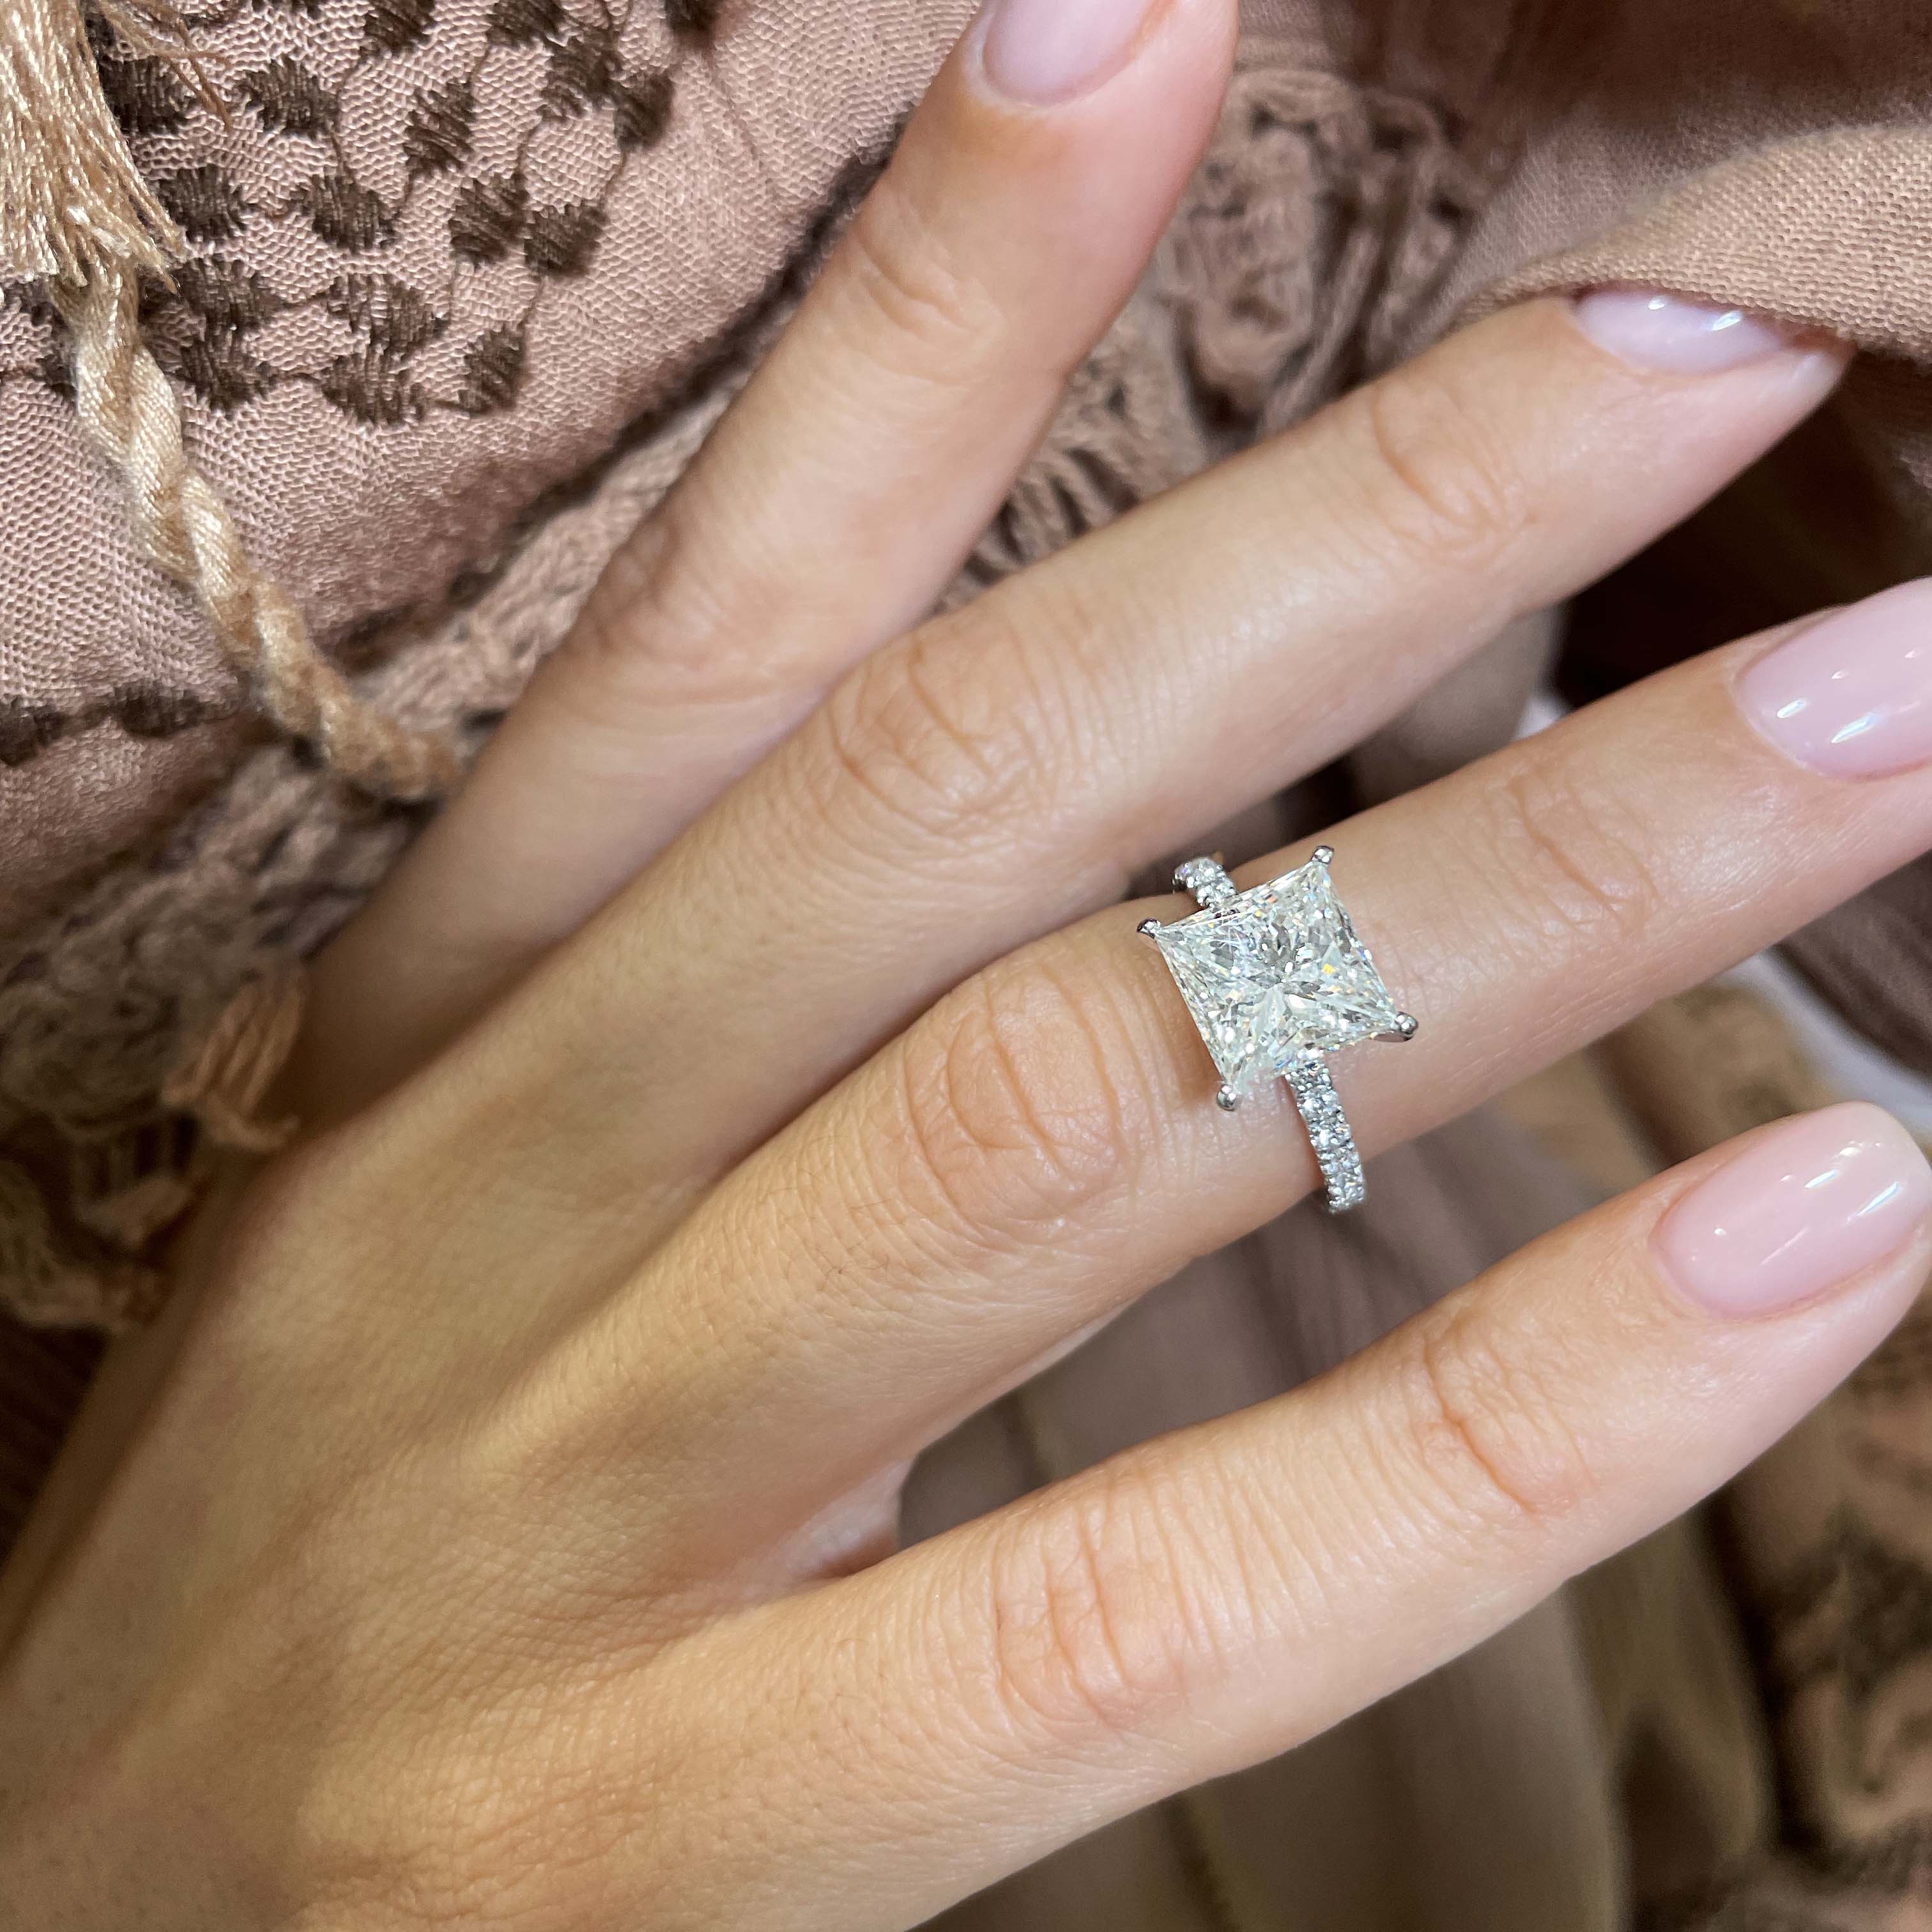 Blair Diamond Engagement Ring -14K White Gold